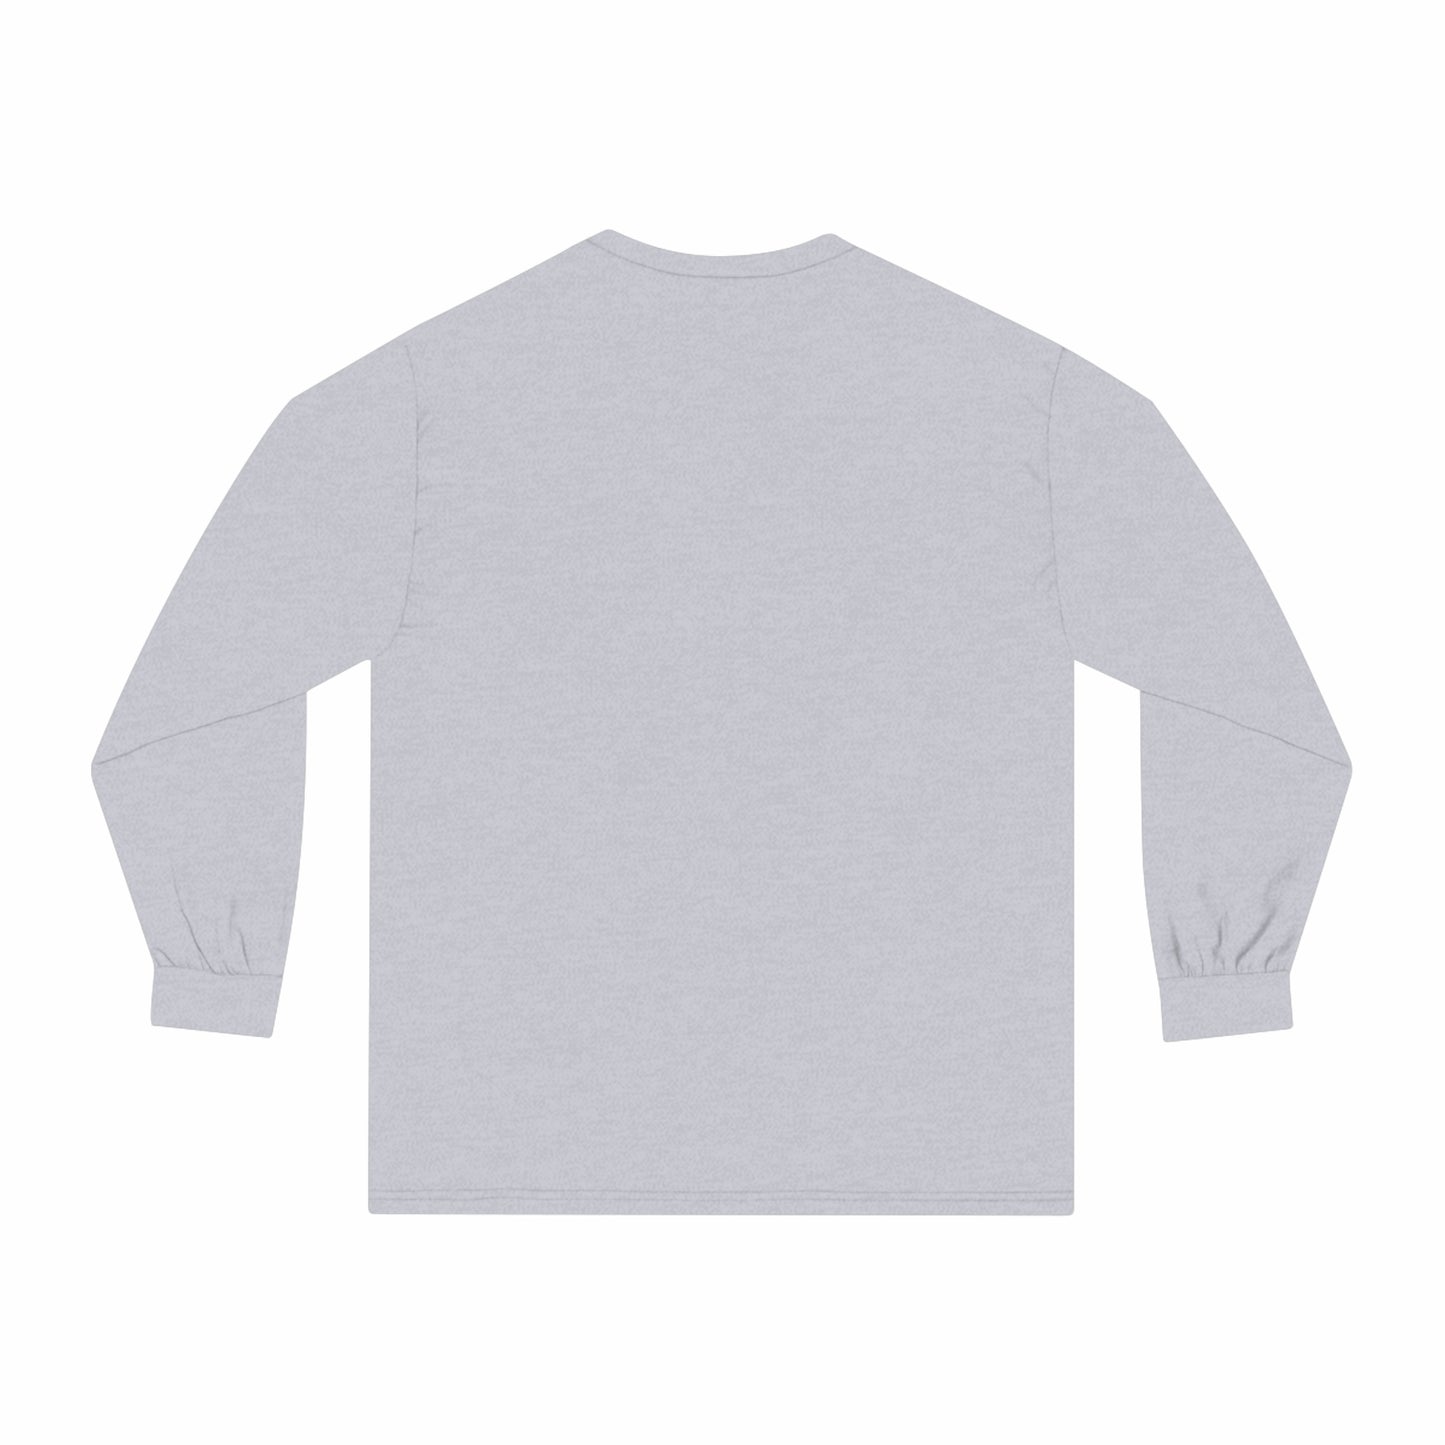 Noisy Kriket's Unisex Classic Long Sleeve T-Shirt